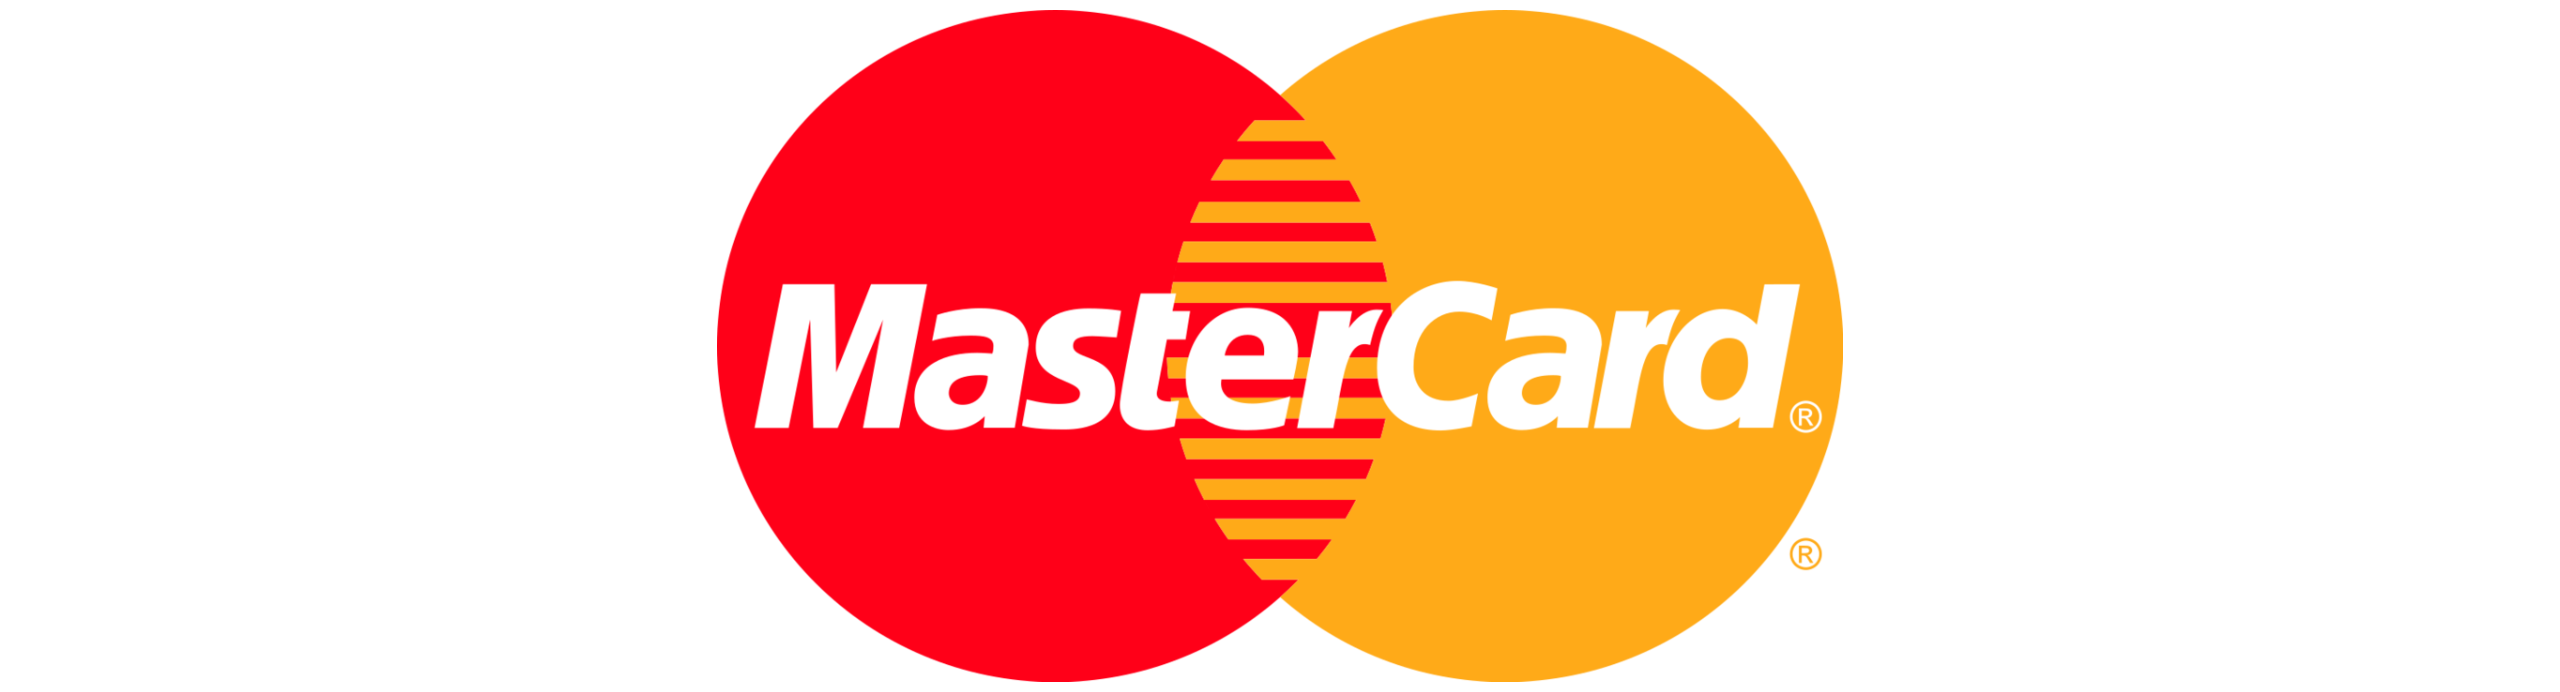 Master-Card logo